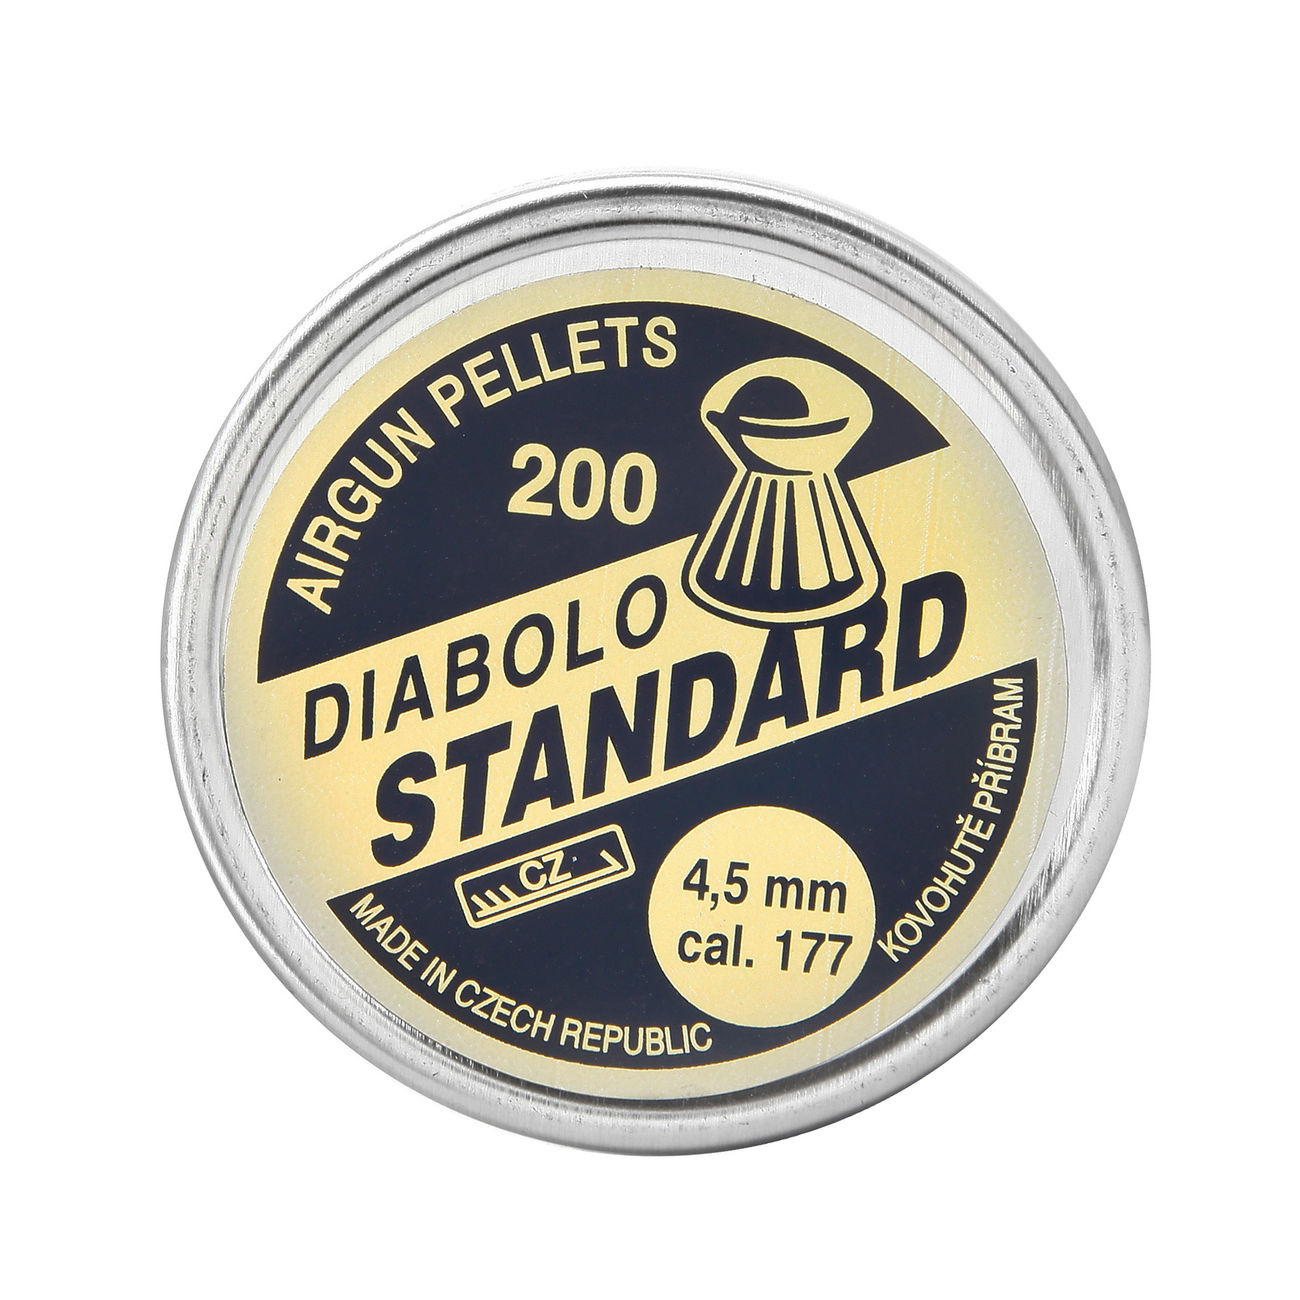 Kovohute Diabolo Standard 4,5 mm 200 Stück Bild 1